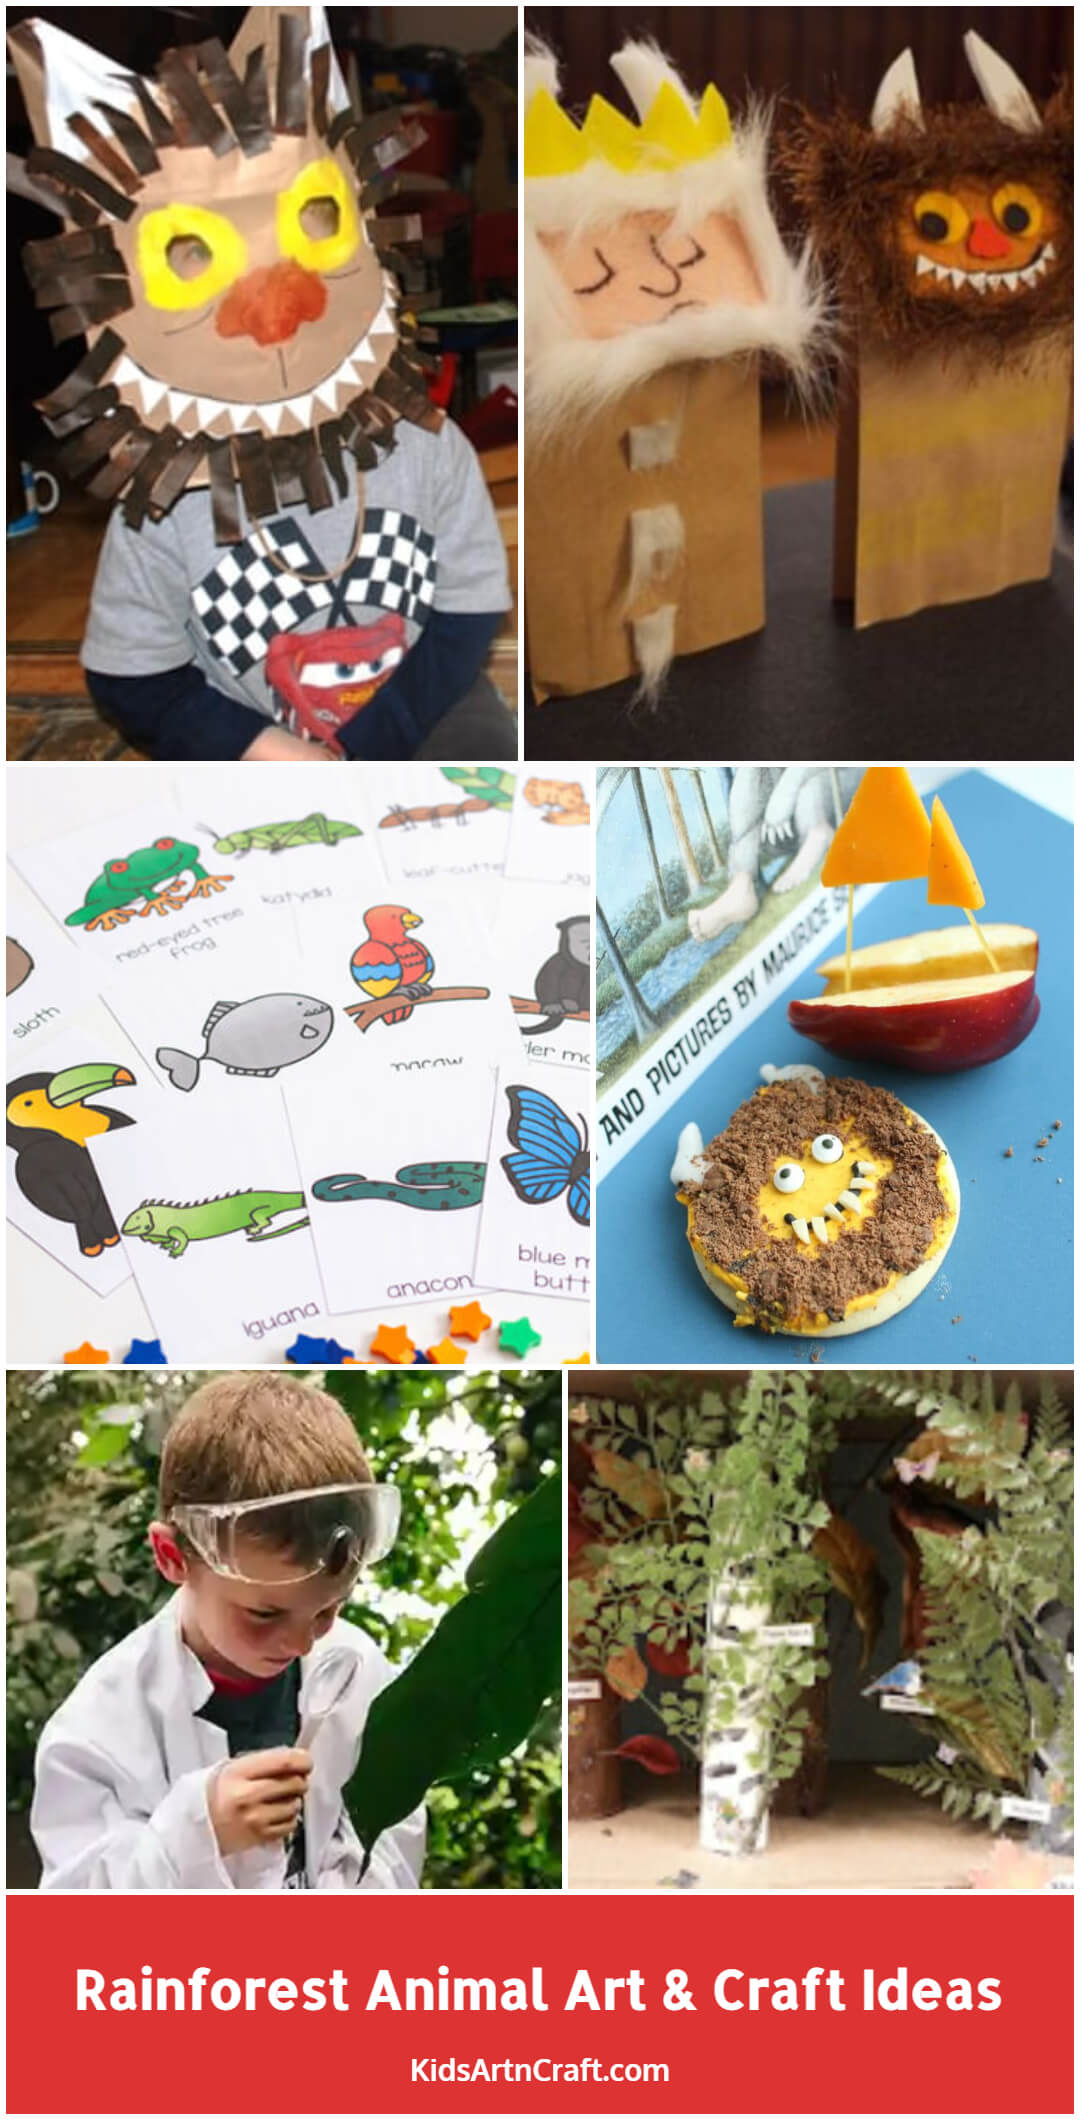 Rainforest Animal Art & Craft Ideas for Kids